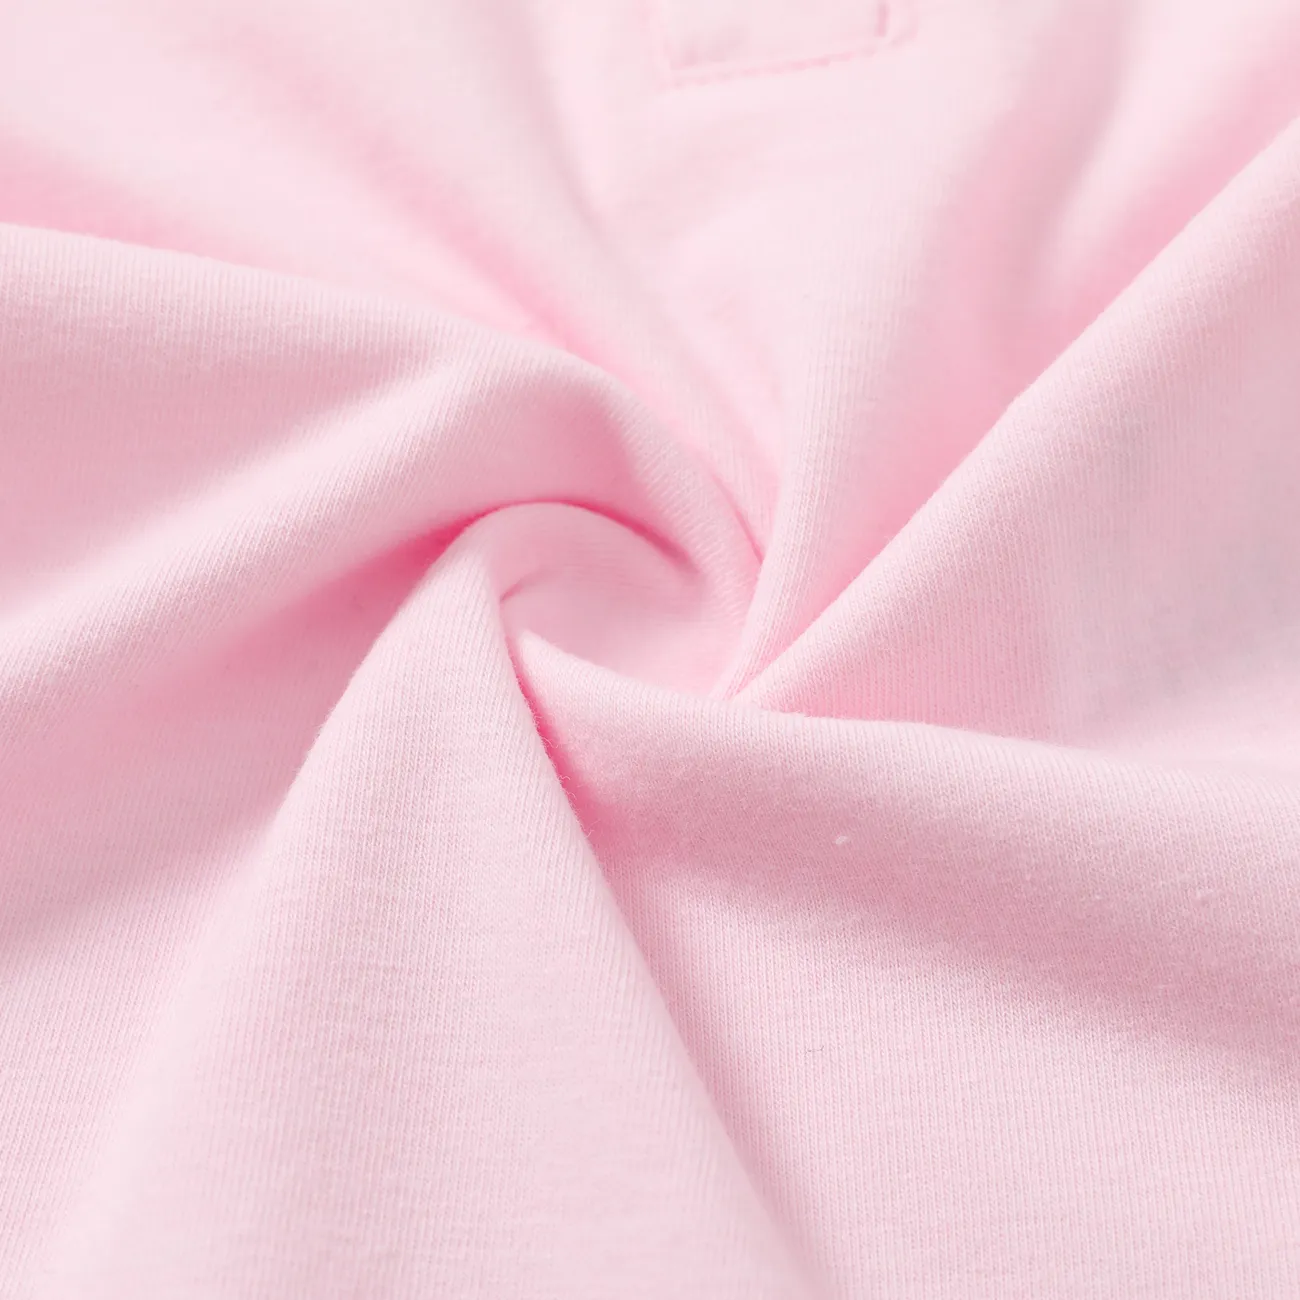 100% Cotton Baby Boy/Girl Cartoon Bear Embroidered Polo Collar Short-sleeve Romper Pink big image 1